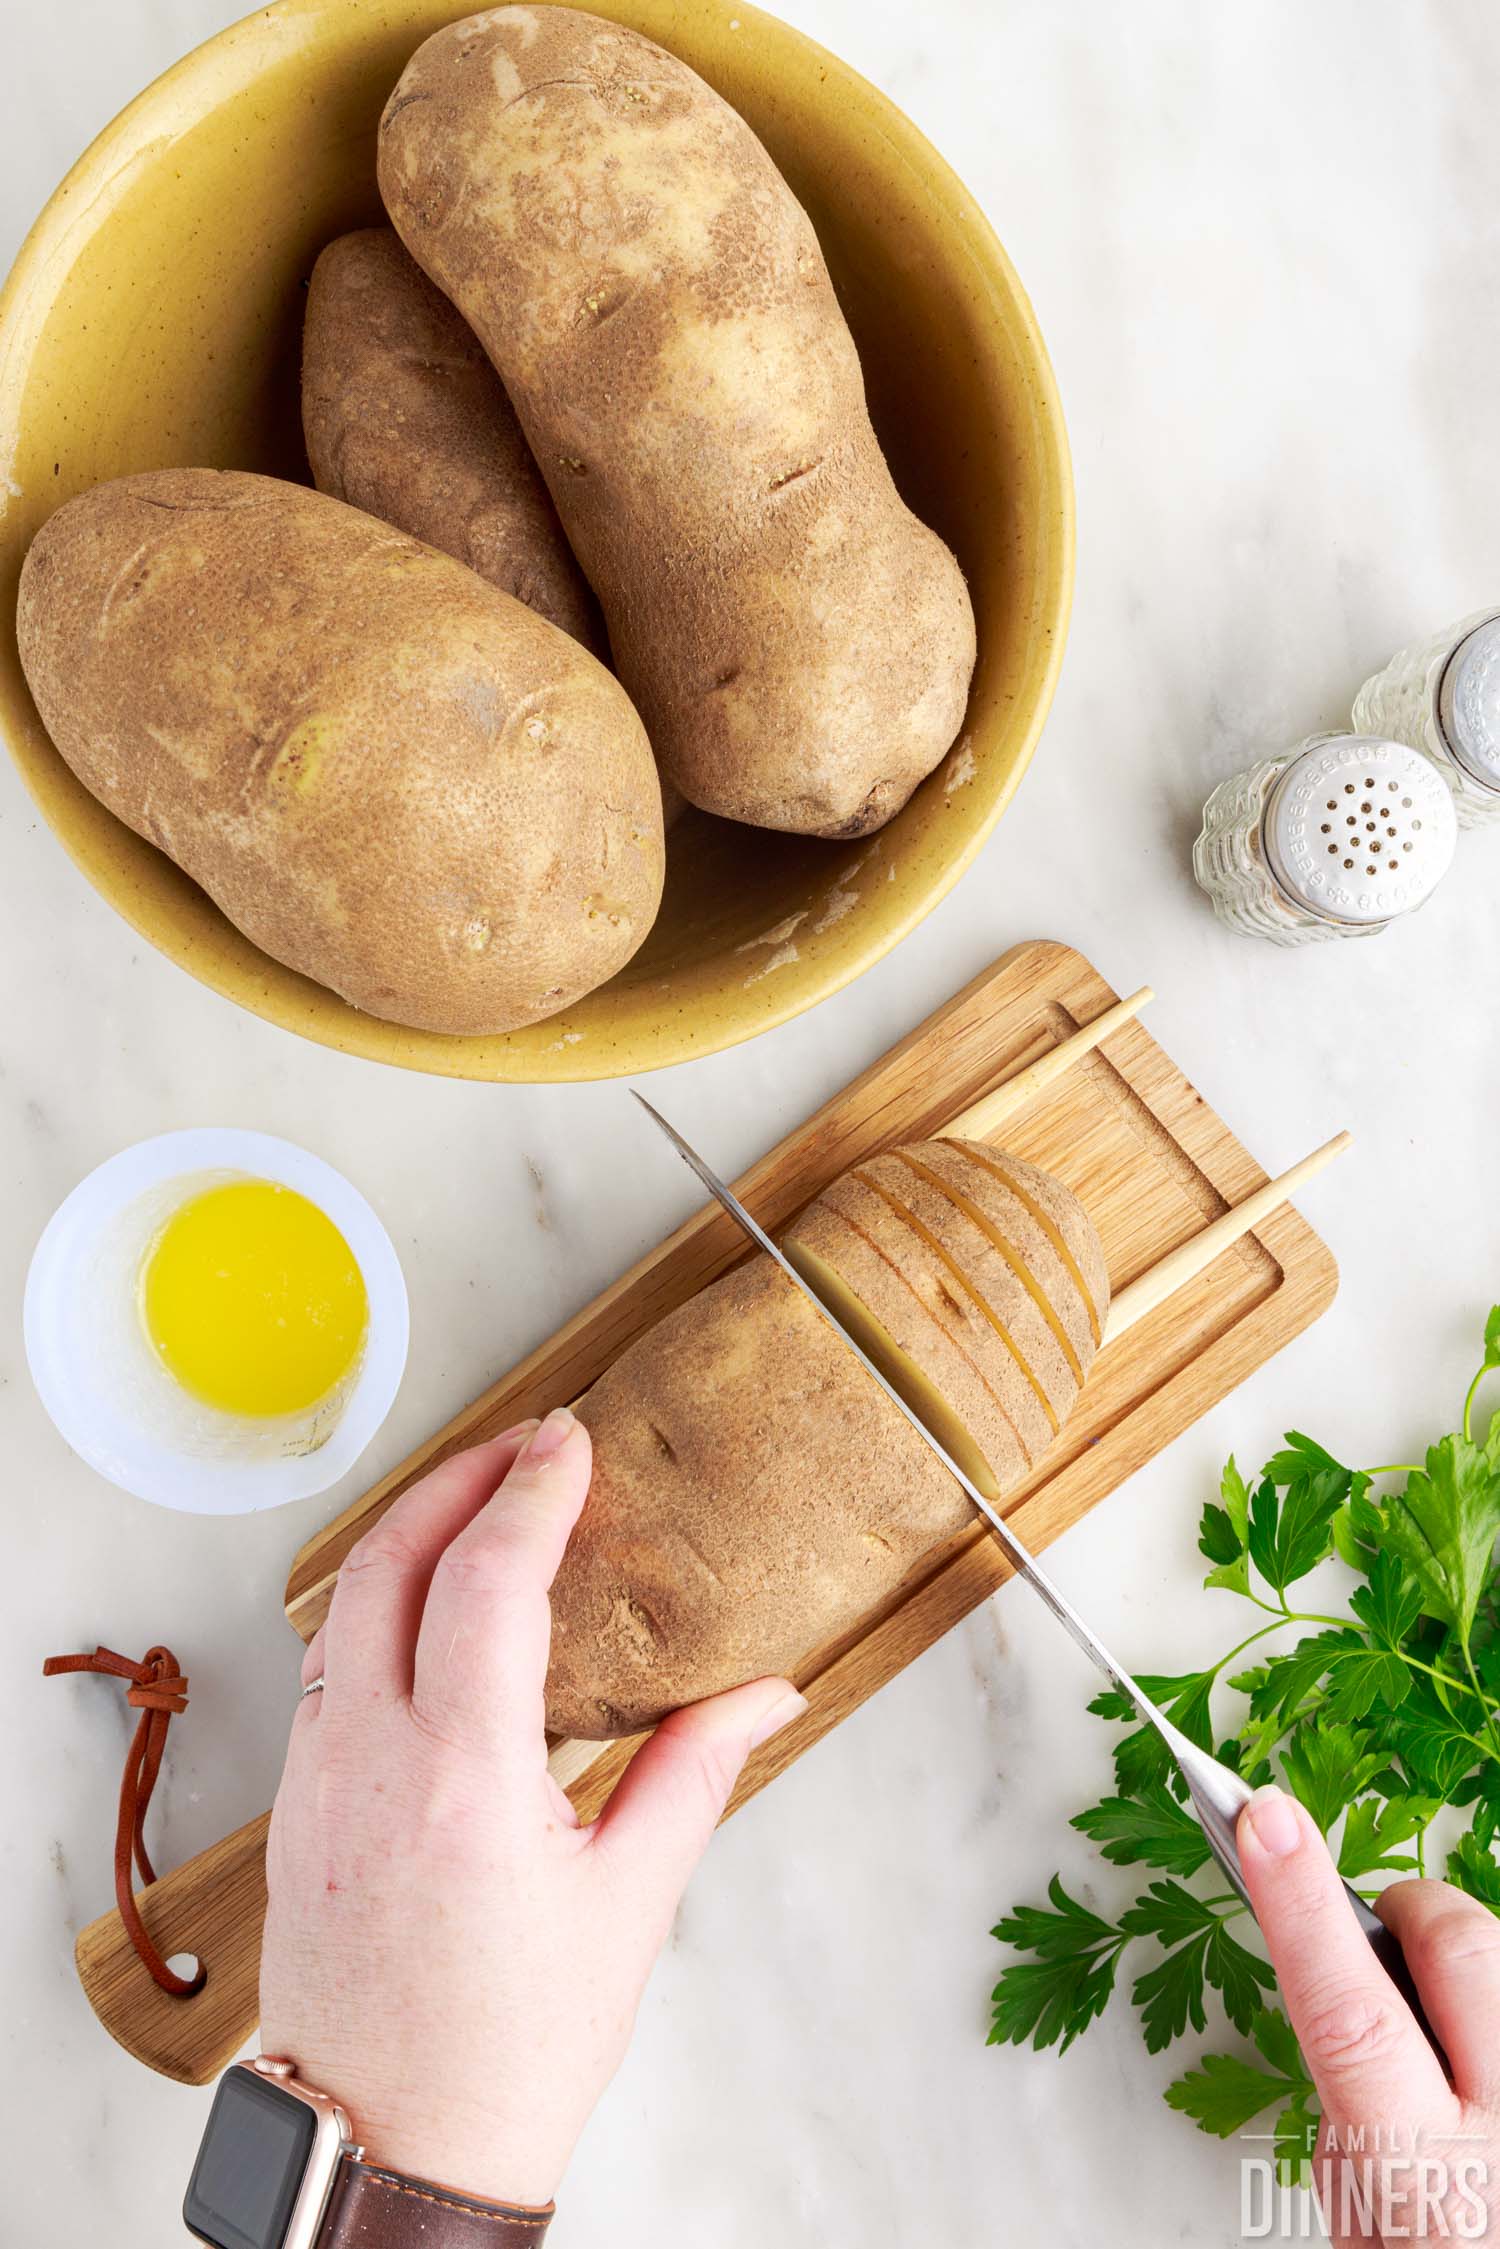 knife slicing across potato